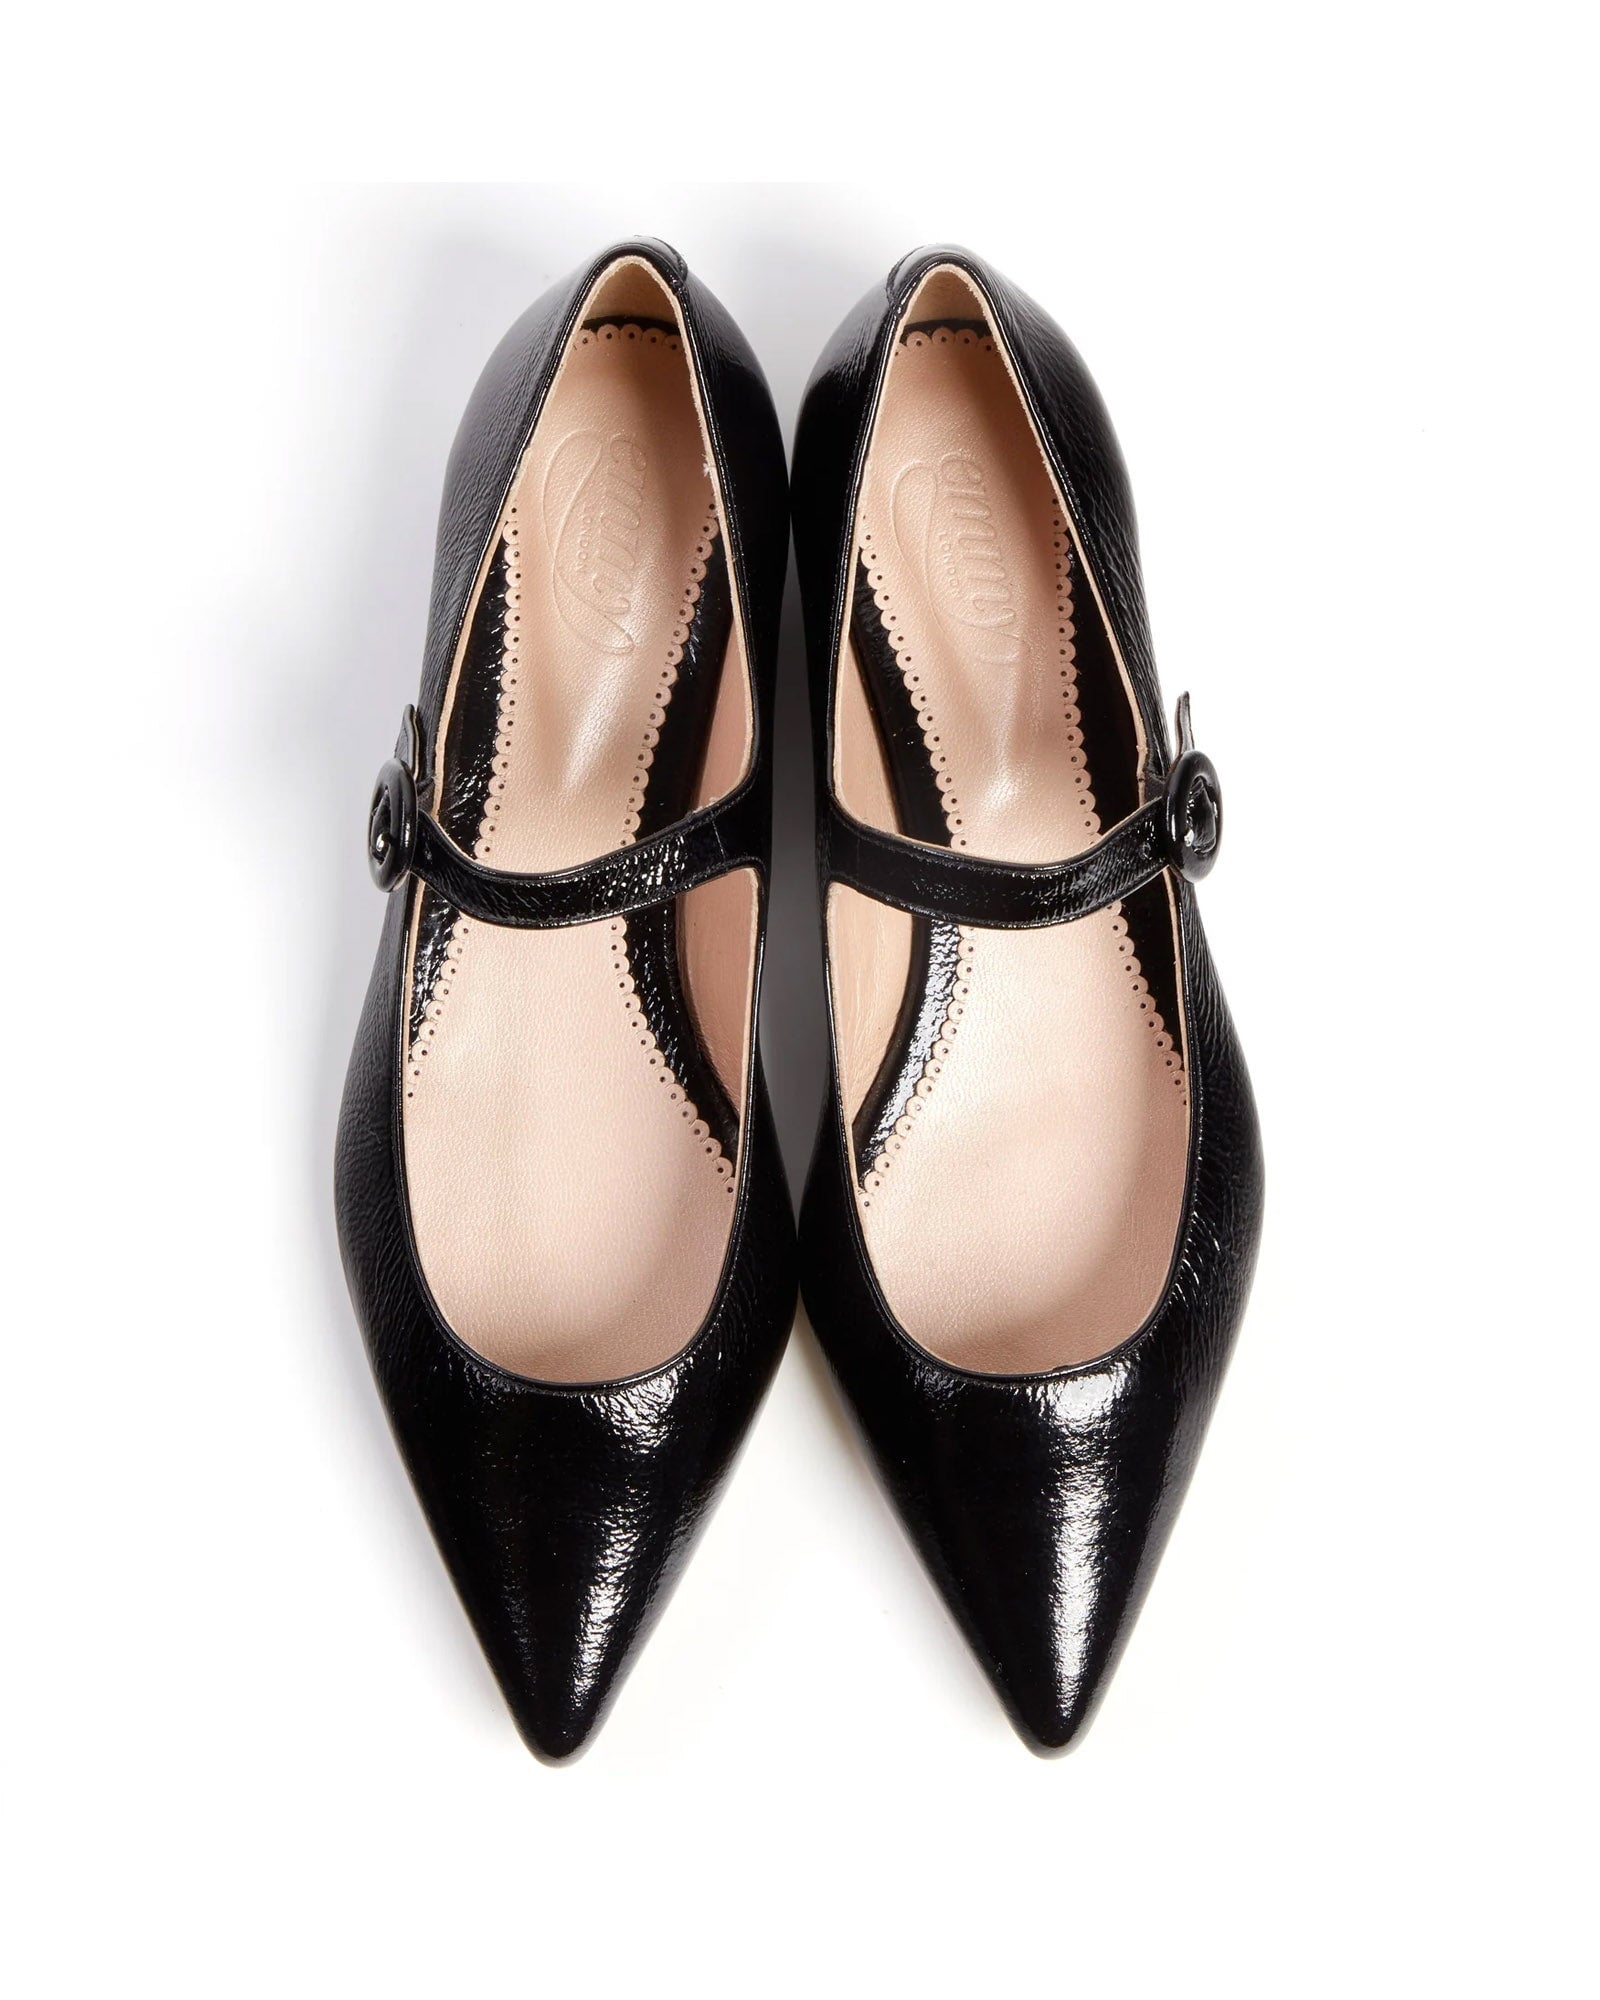 Eden Flat Patent Black Leather Fashion Shoe Black Leather Flat Shoe  image